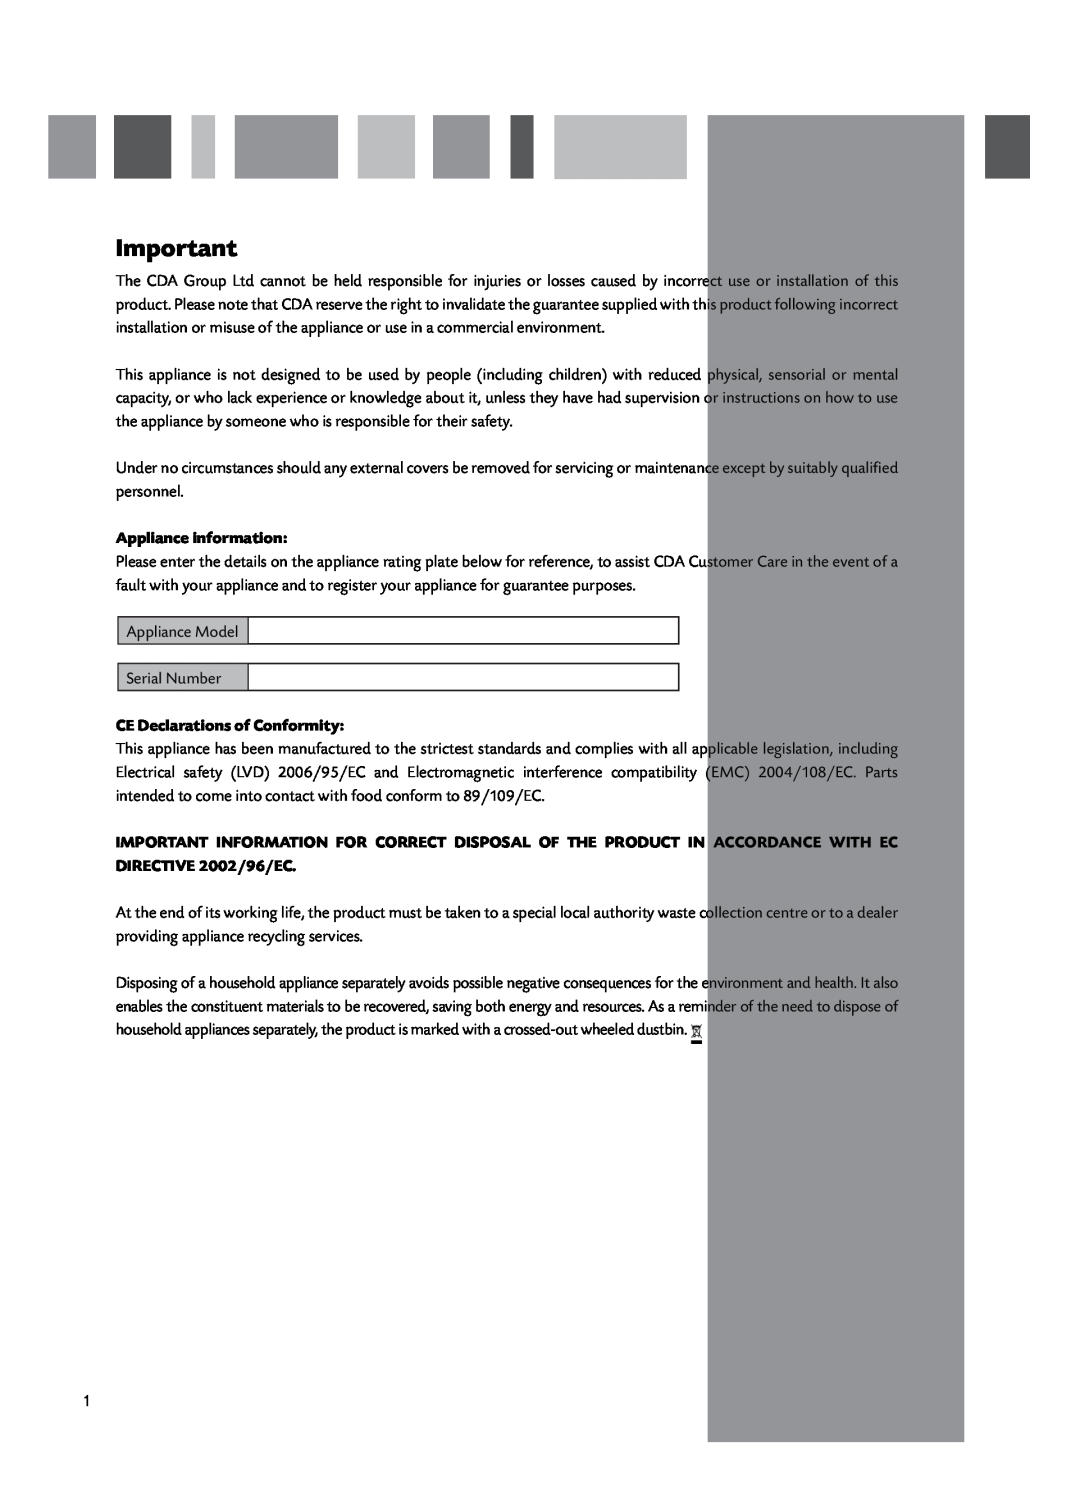 CDA HCC662 manual Appliance information, CE Declarations of Conformity 